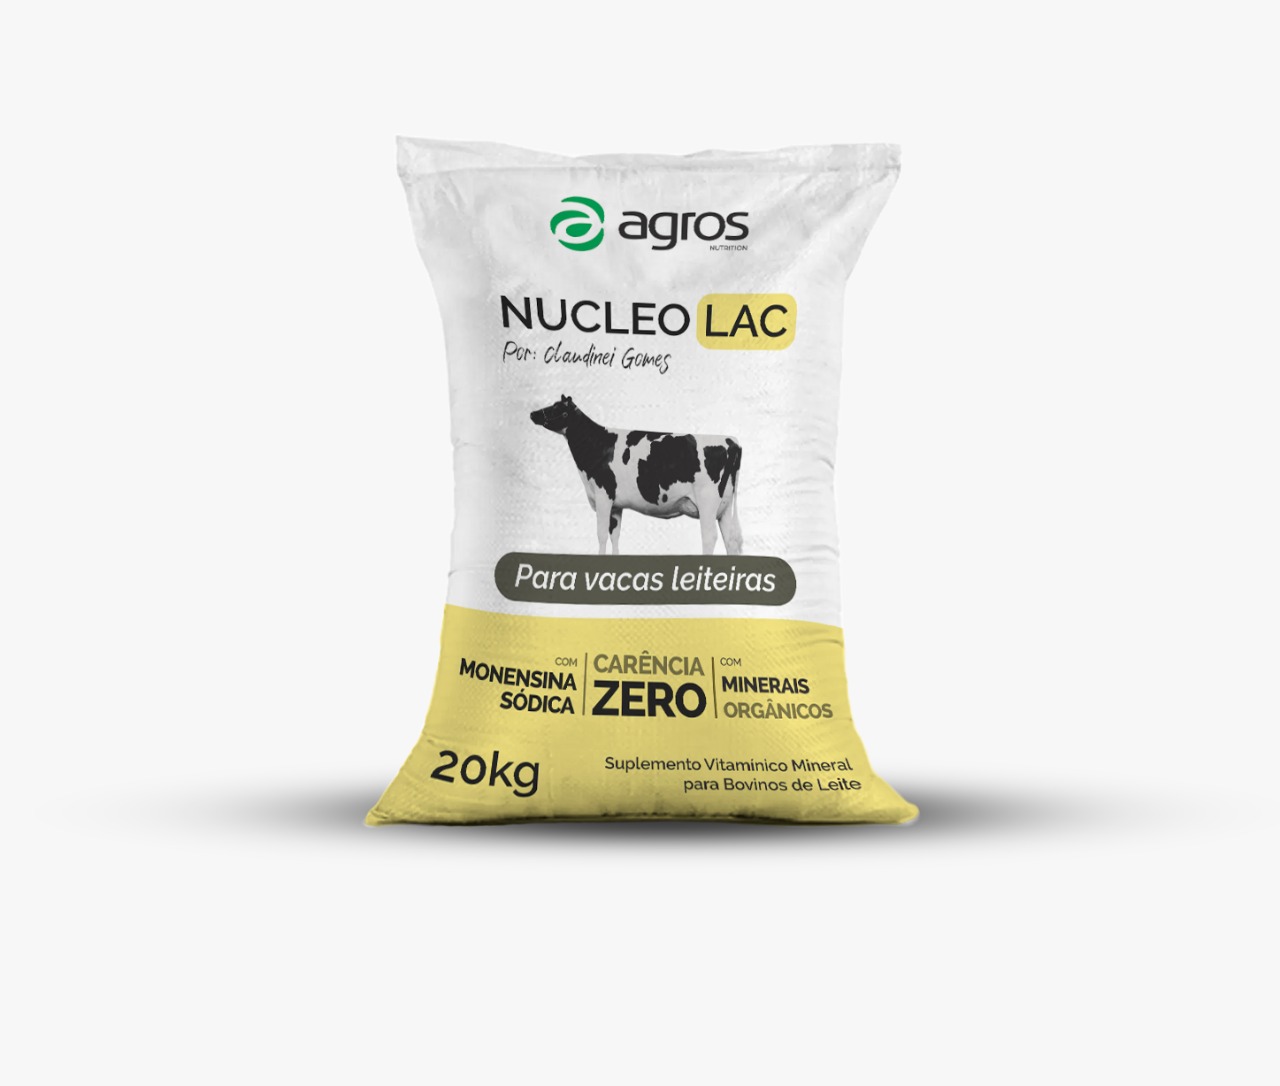 nucleo-lac-agros-nutrition-clube-do-gado